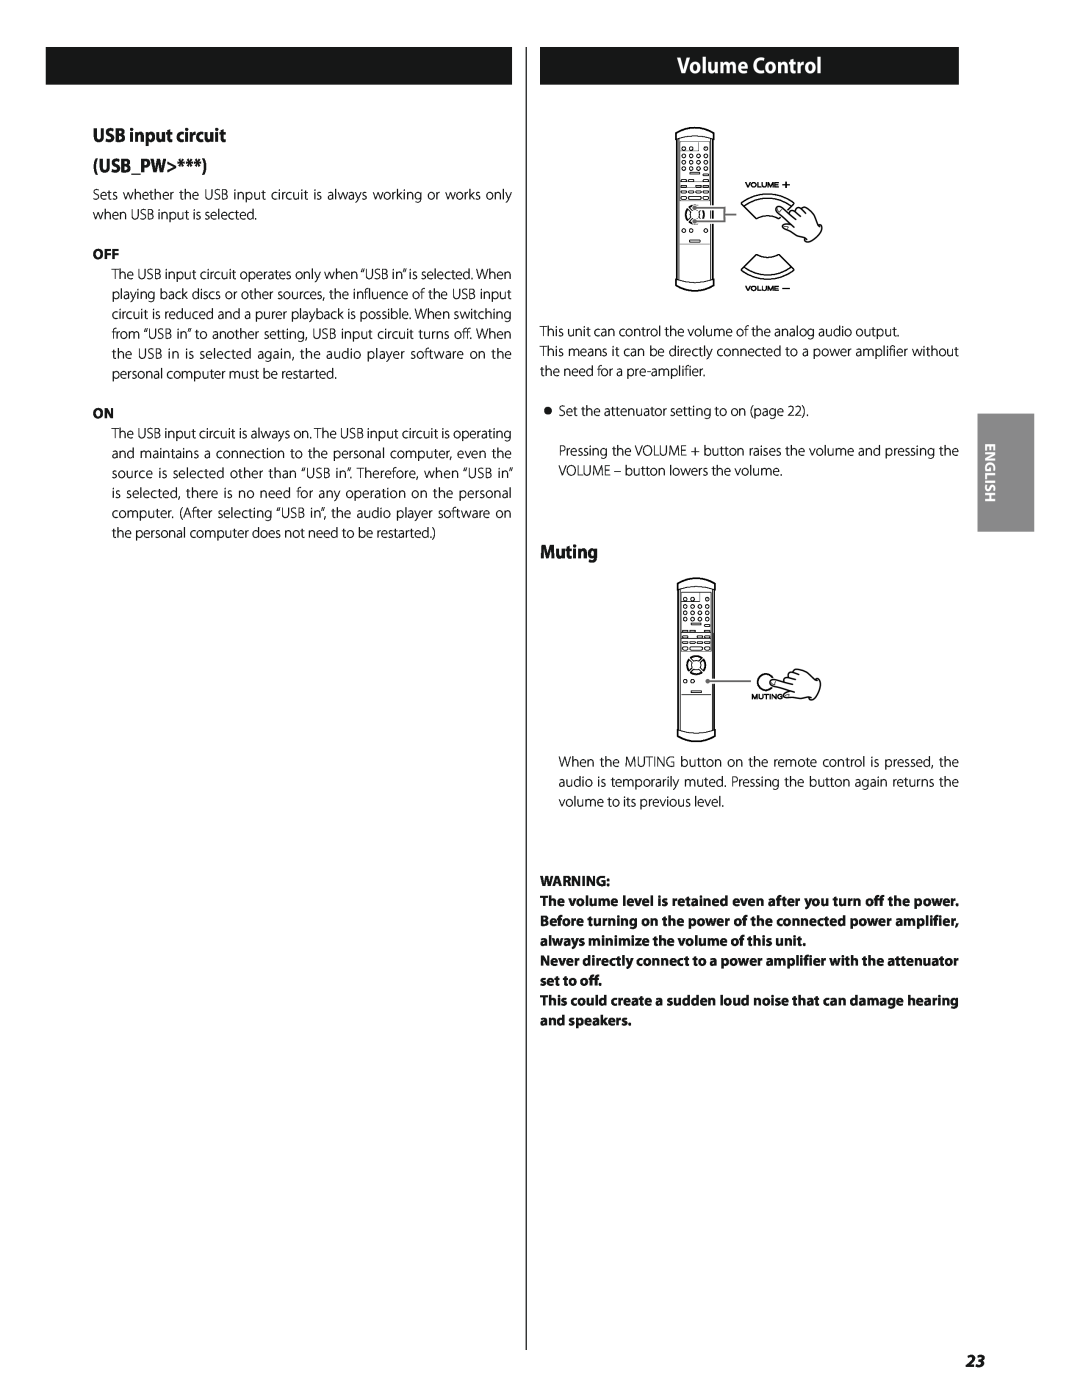 Esoteric SA-50 owner manual Volume Control, Muting, USB input circuit USB PW 